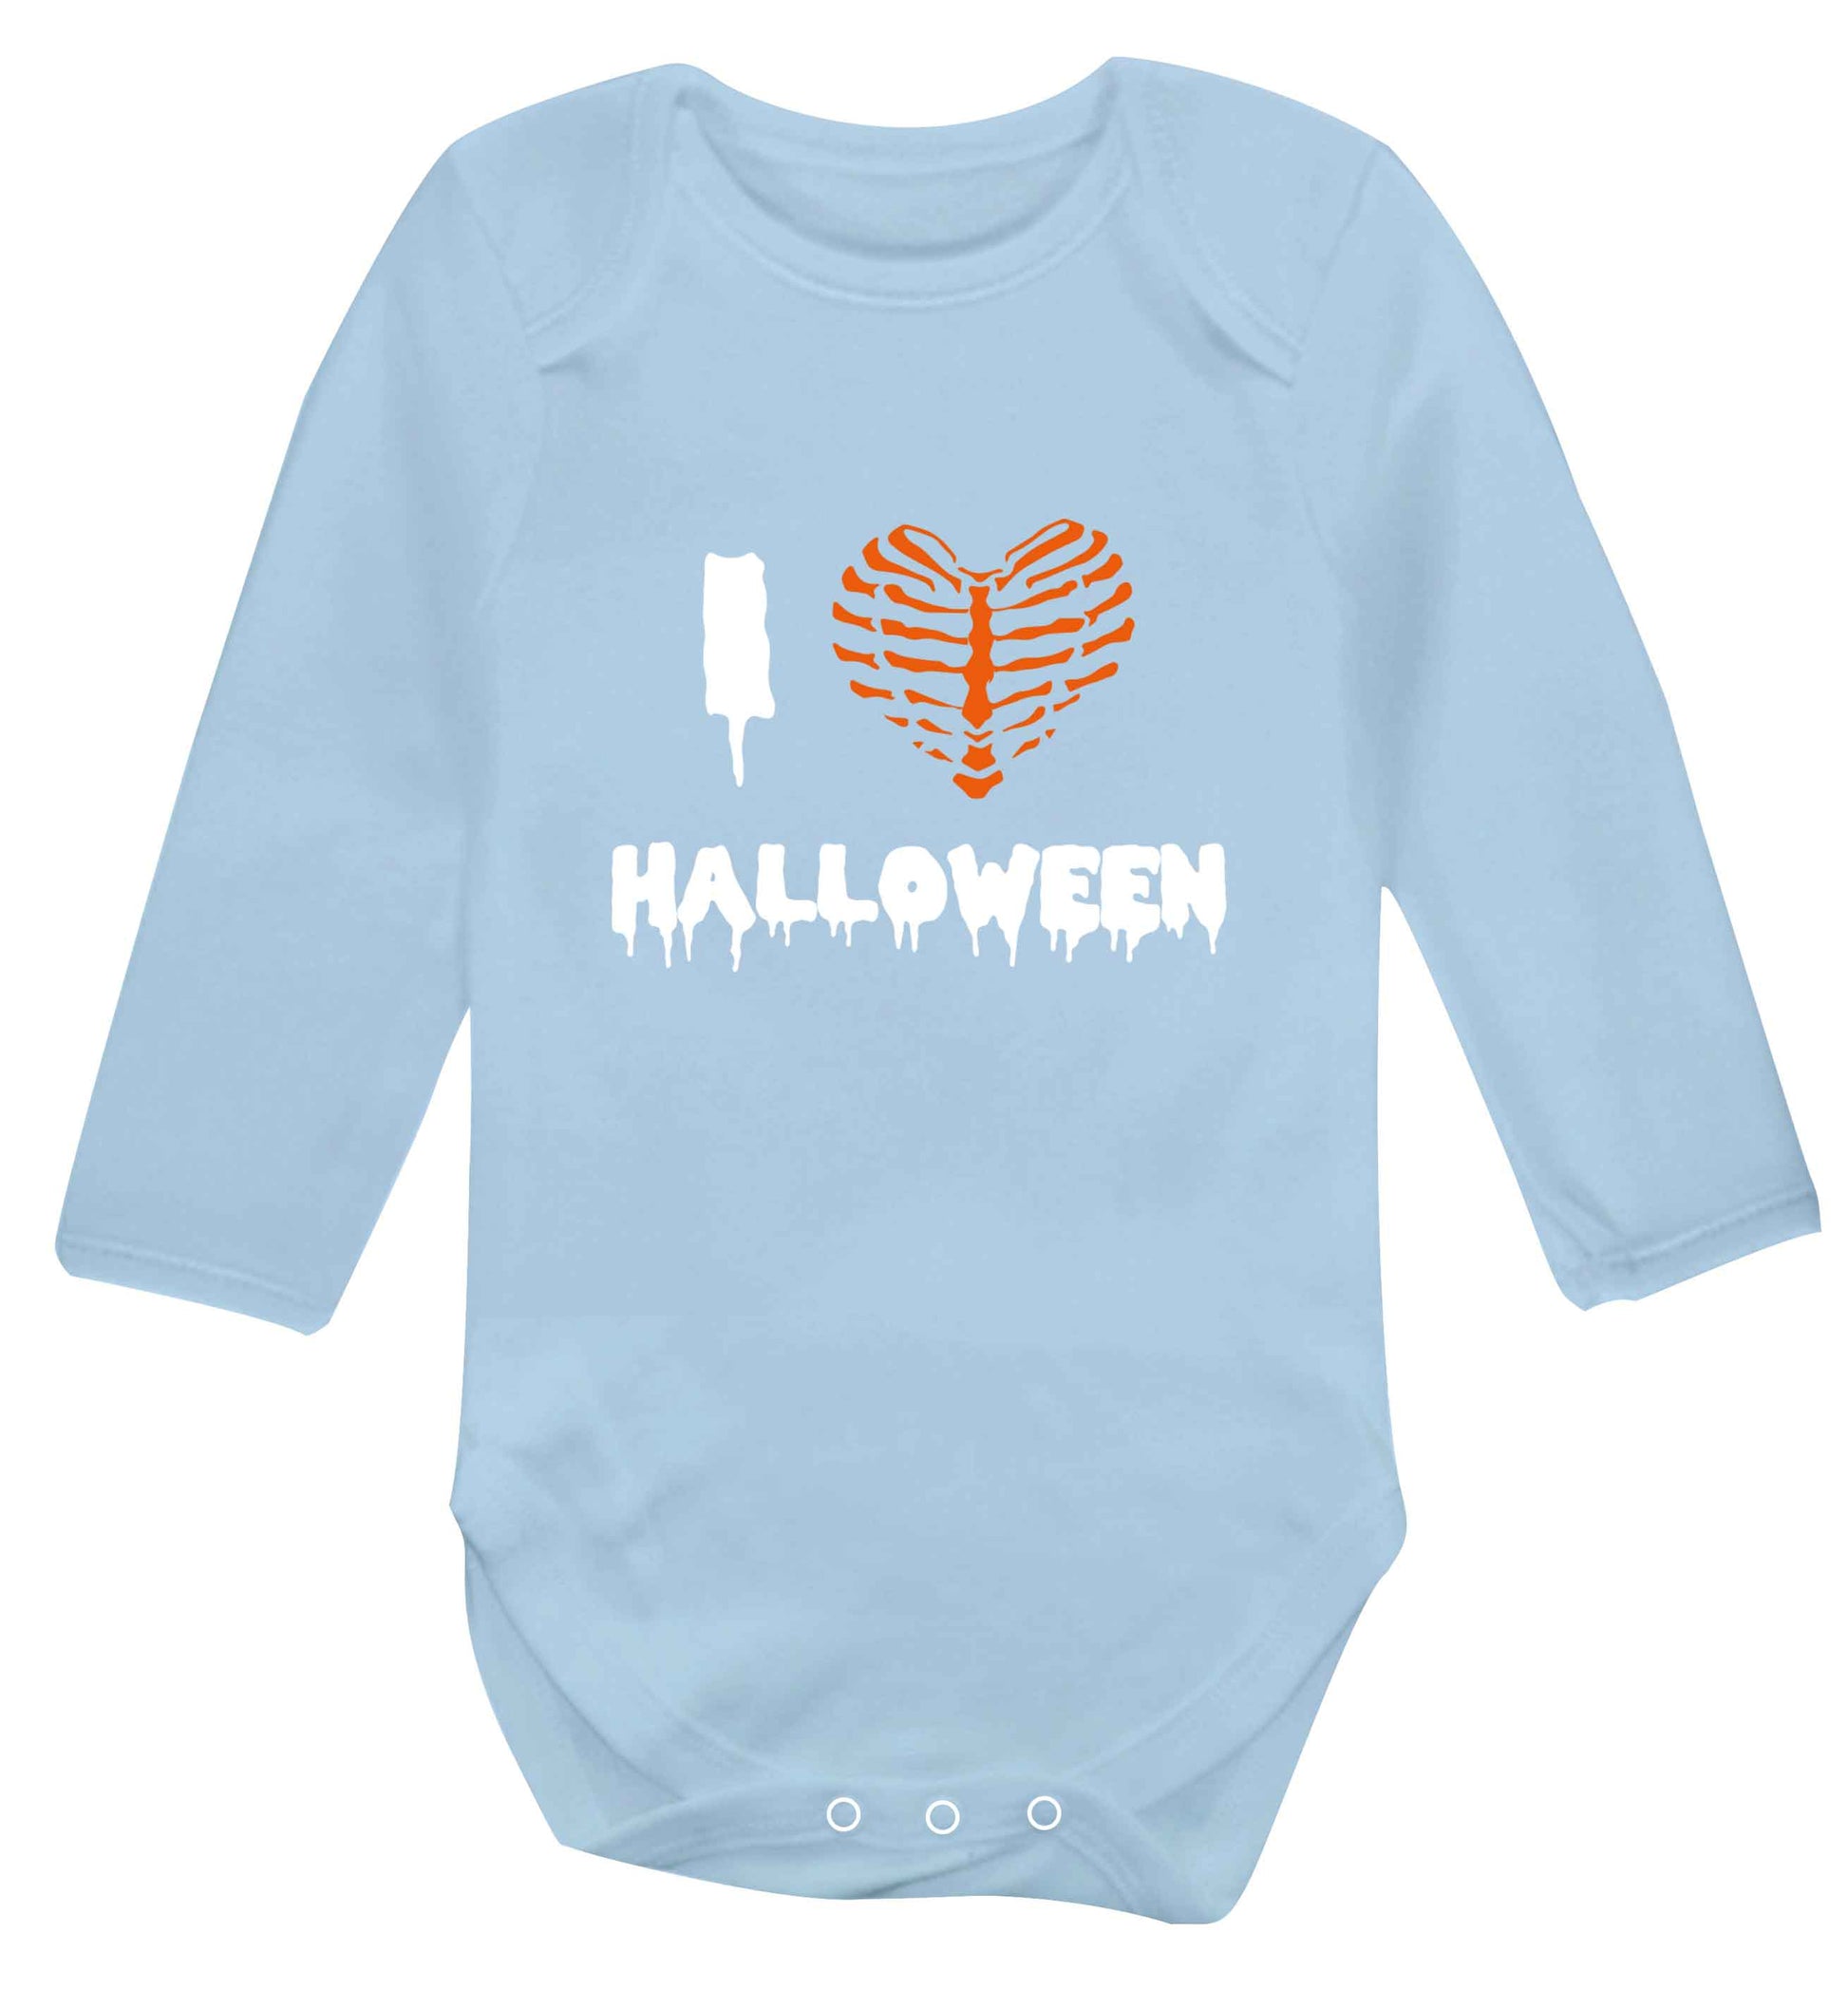 I love halloween baby vest long sleeved pale blue 6-12 months